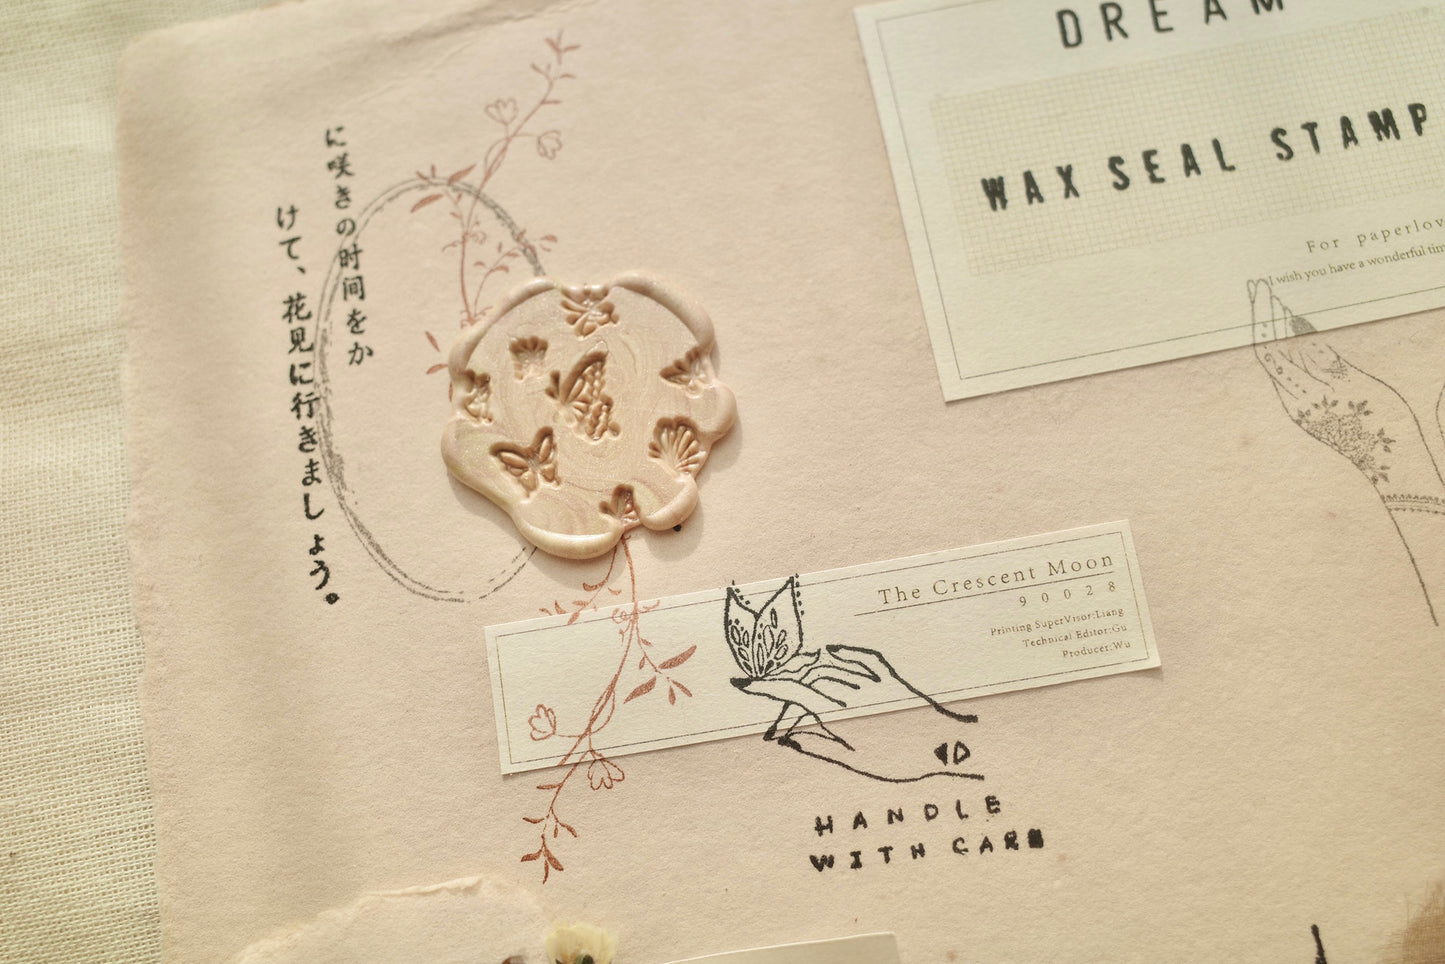 Hanen Studio - Butterfly Dream | Wax Seal Stamp